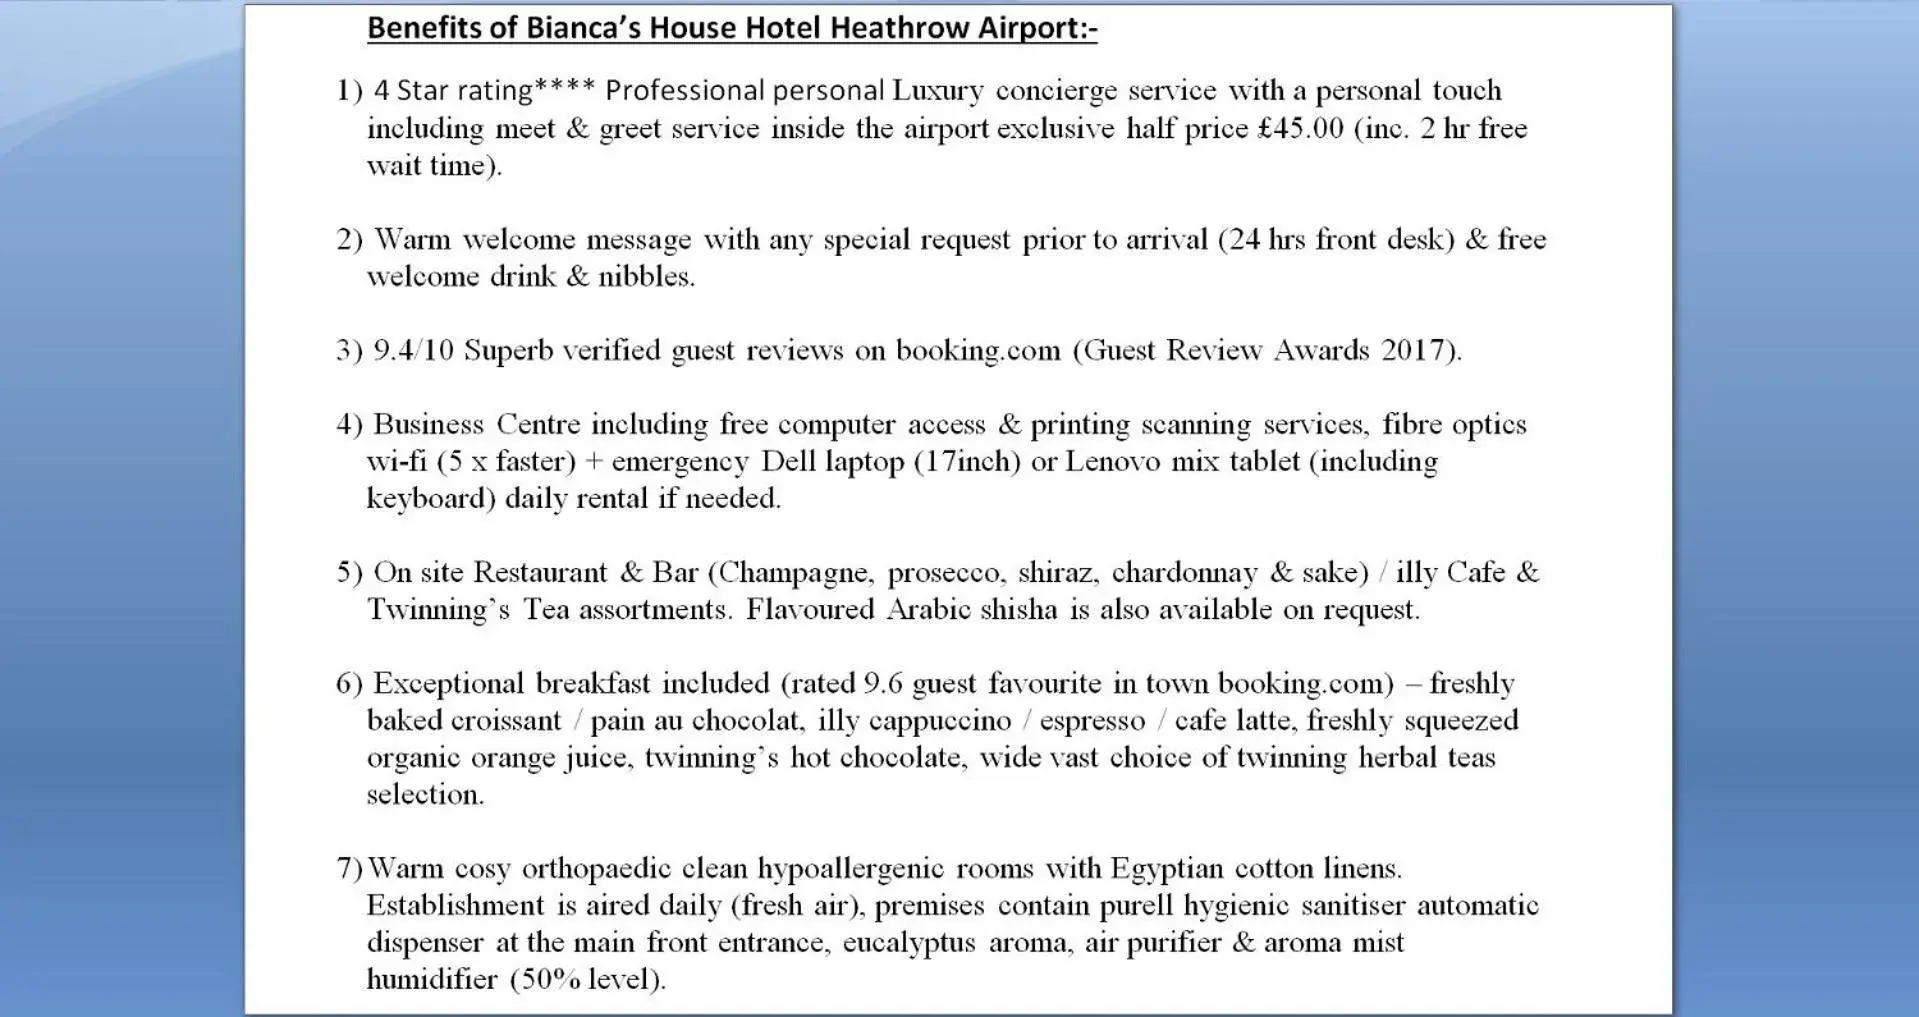 Certificate/Award in Bianca's House Hotel Heathrow Airport